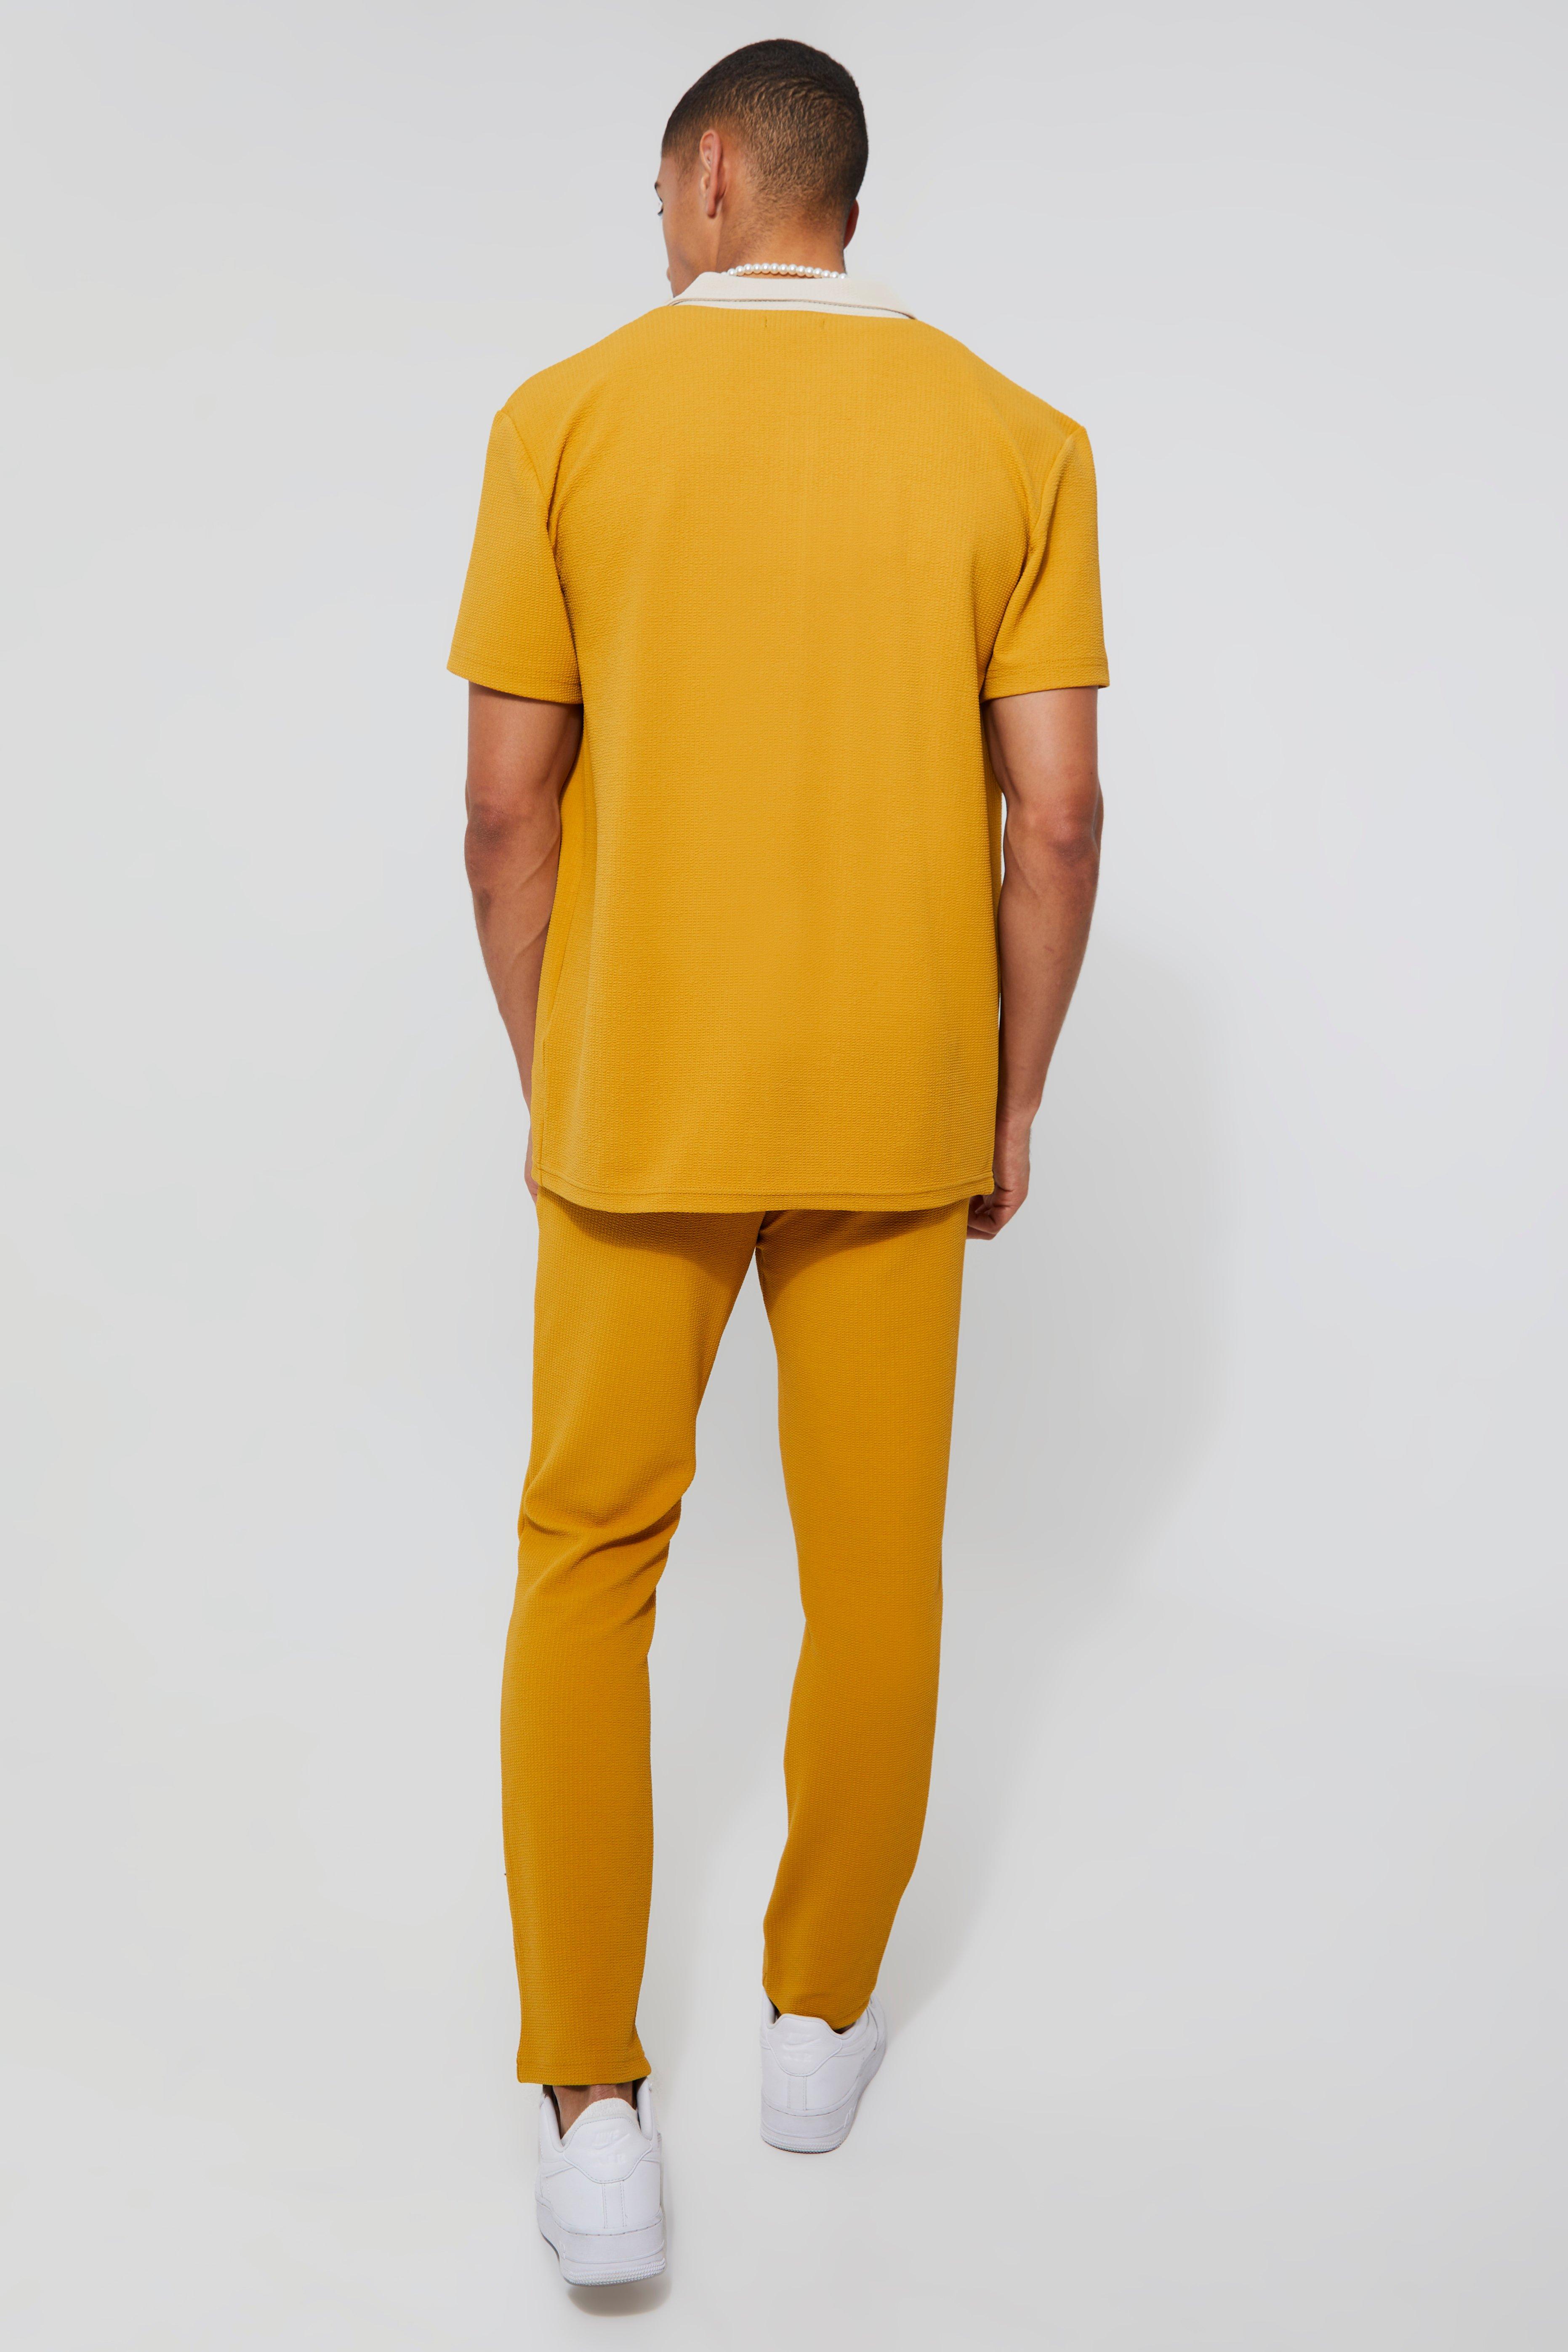 boohoo Mens Short Sleeve Jersey Textured Shirt and Set - Yellow XL